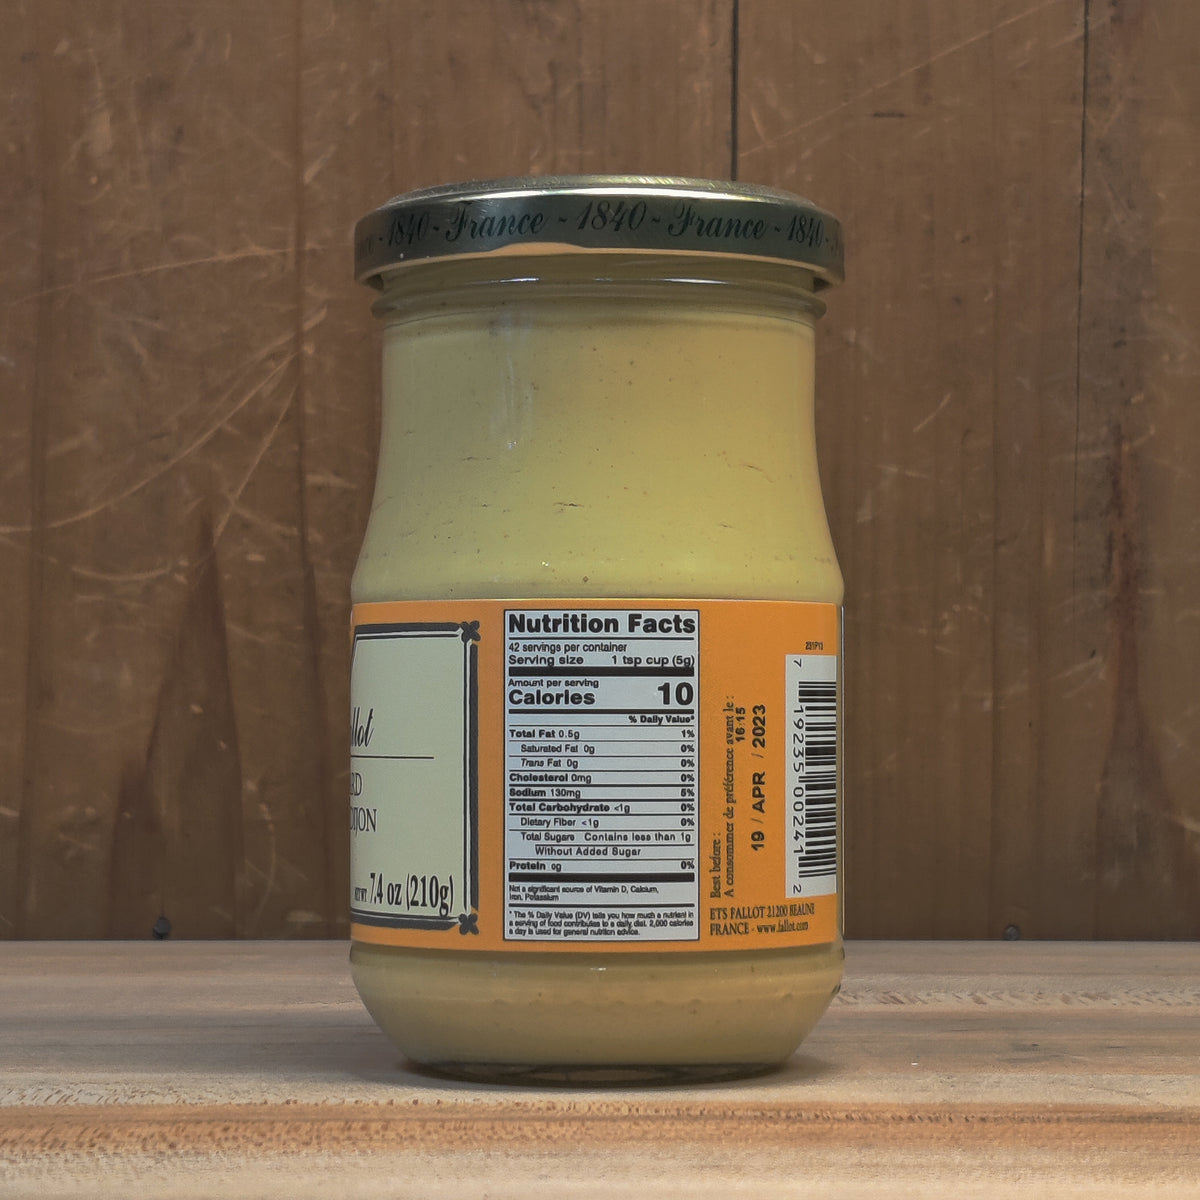 Edmond Fallout Dijon Mustard - 7.4oz